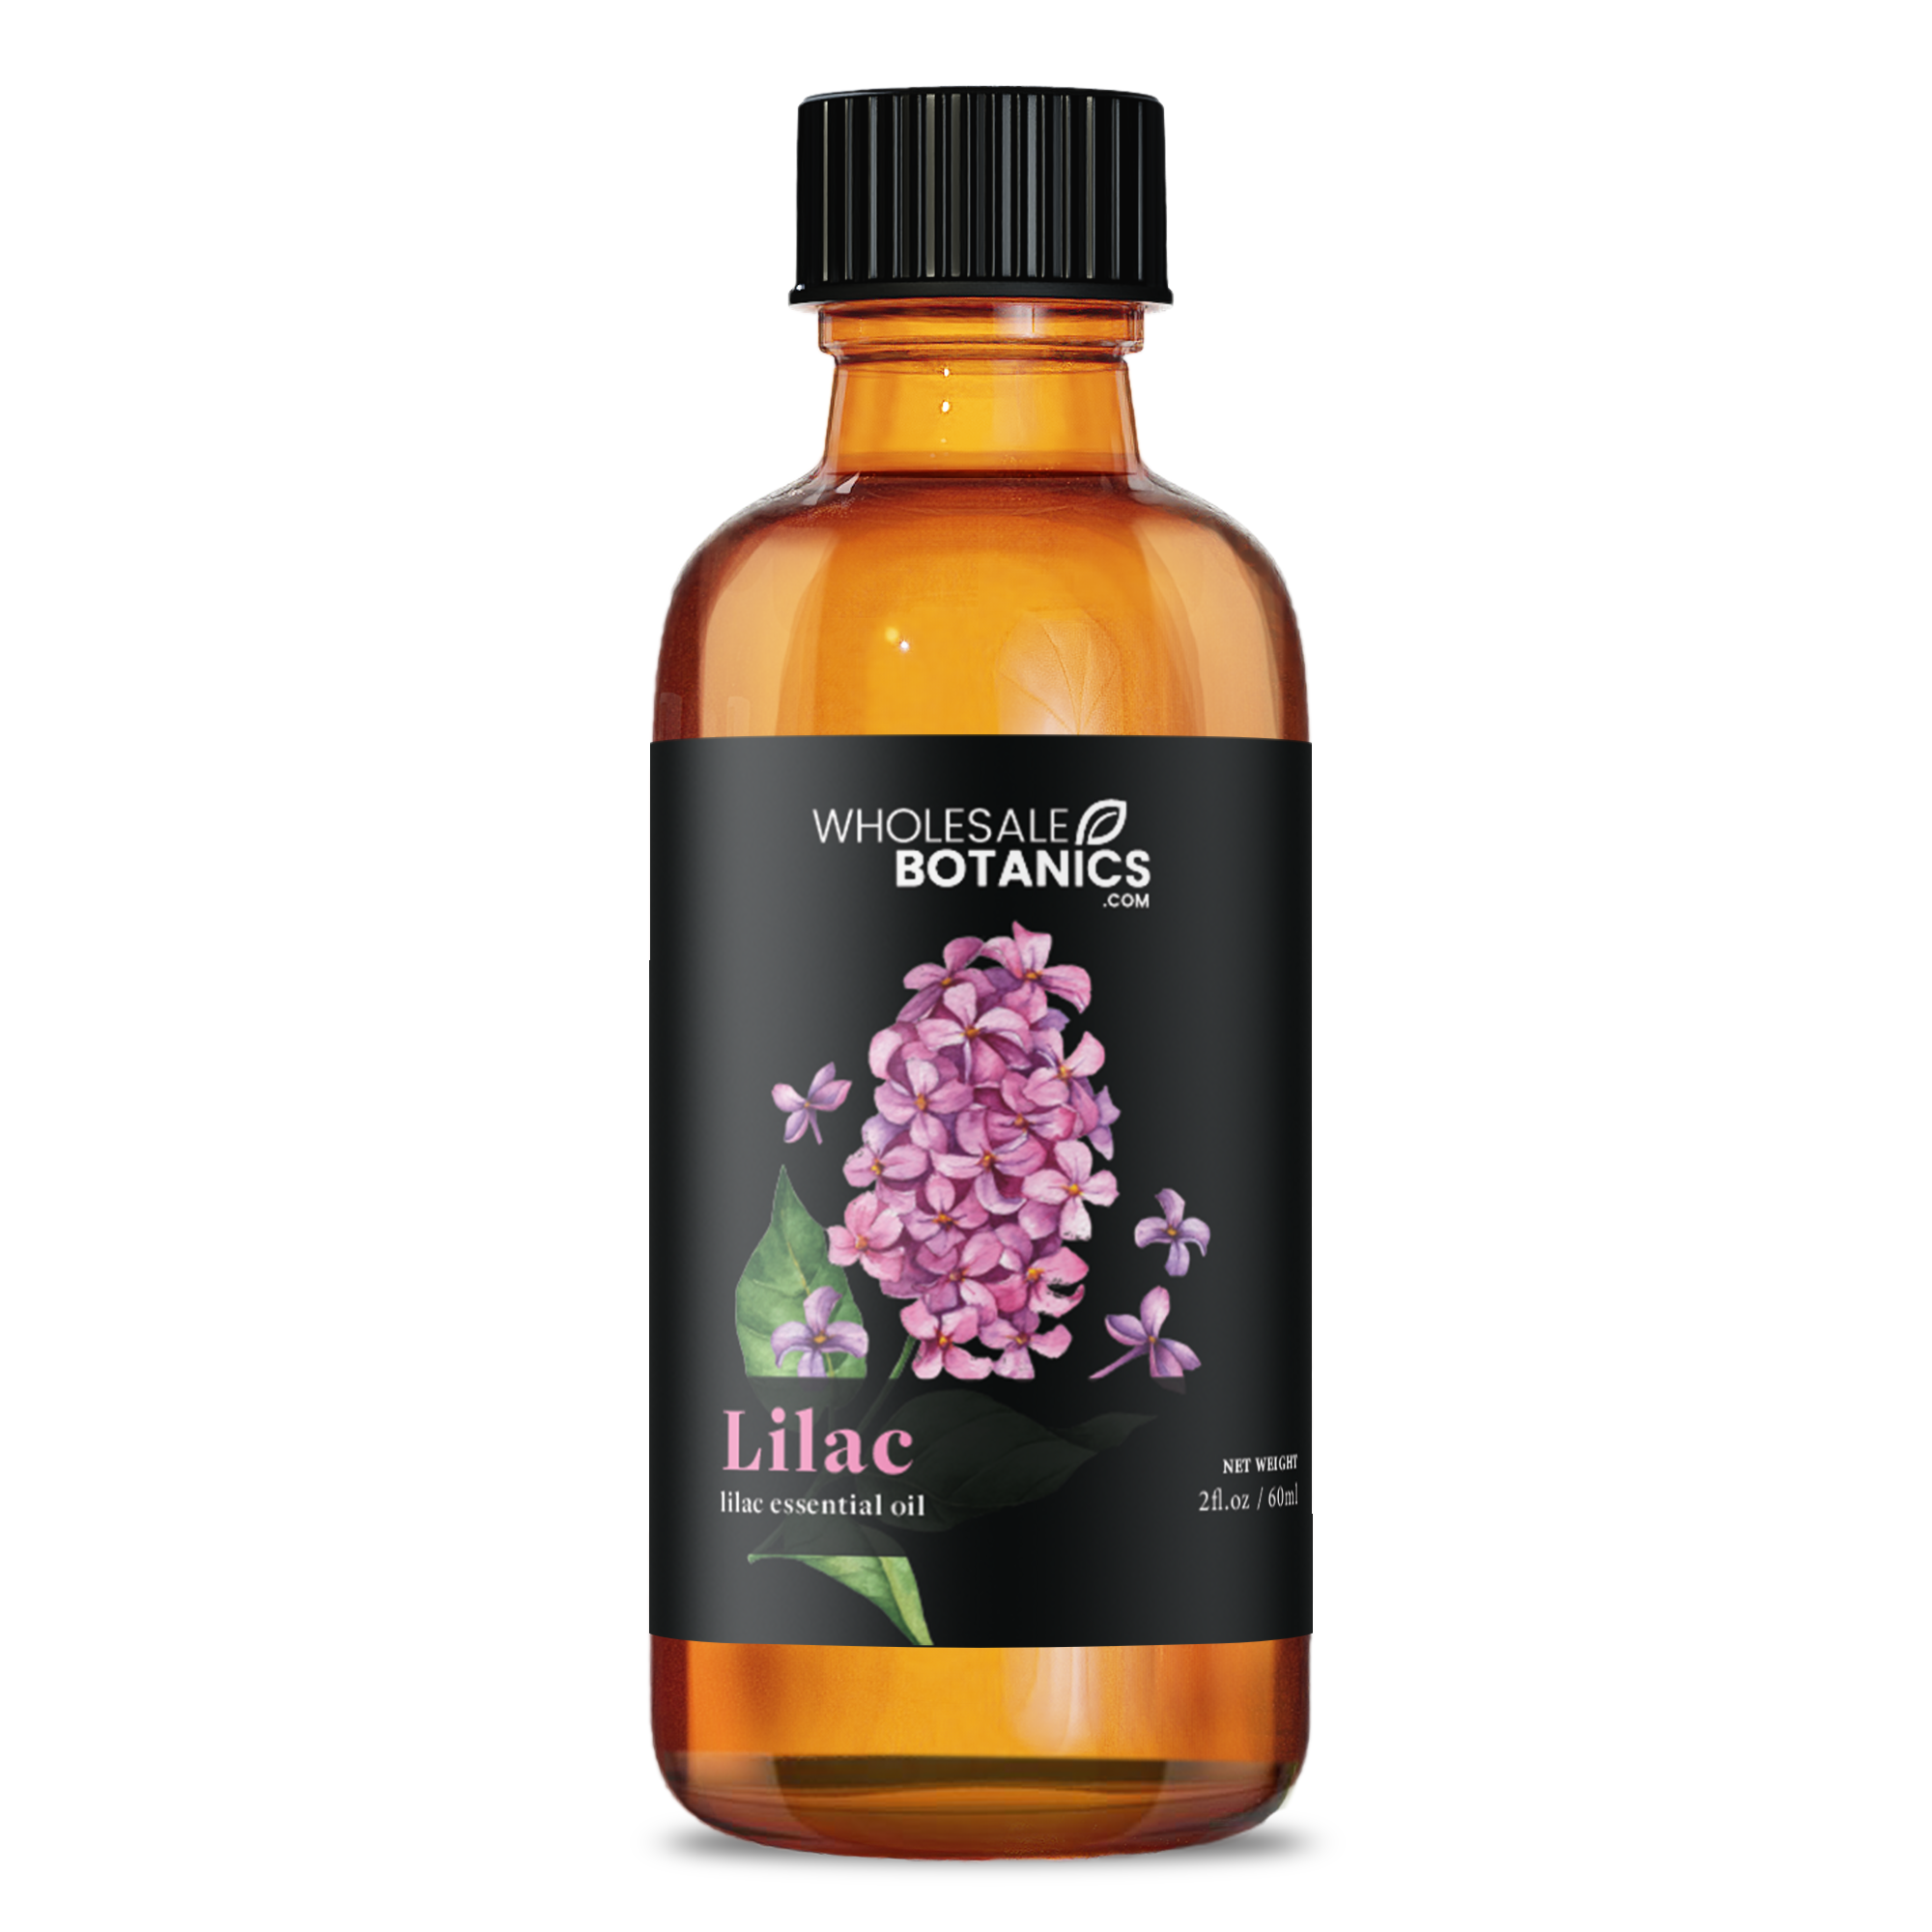 Essence-Lux 60ml Oils - Vanilla Essential Oil - 2 Fluid Ounces